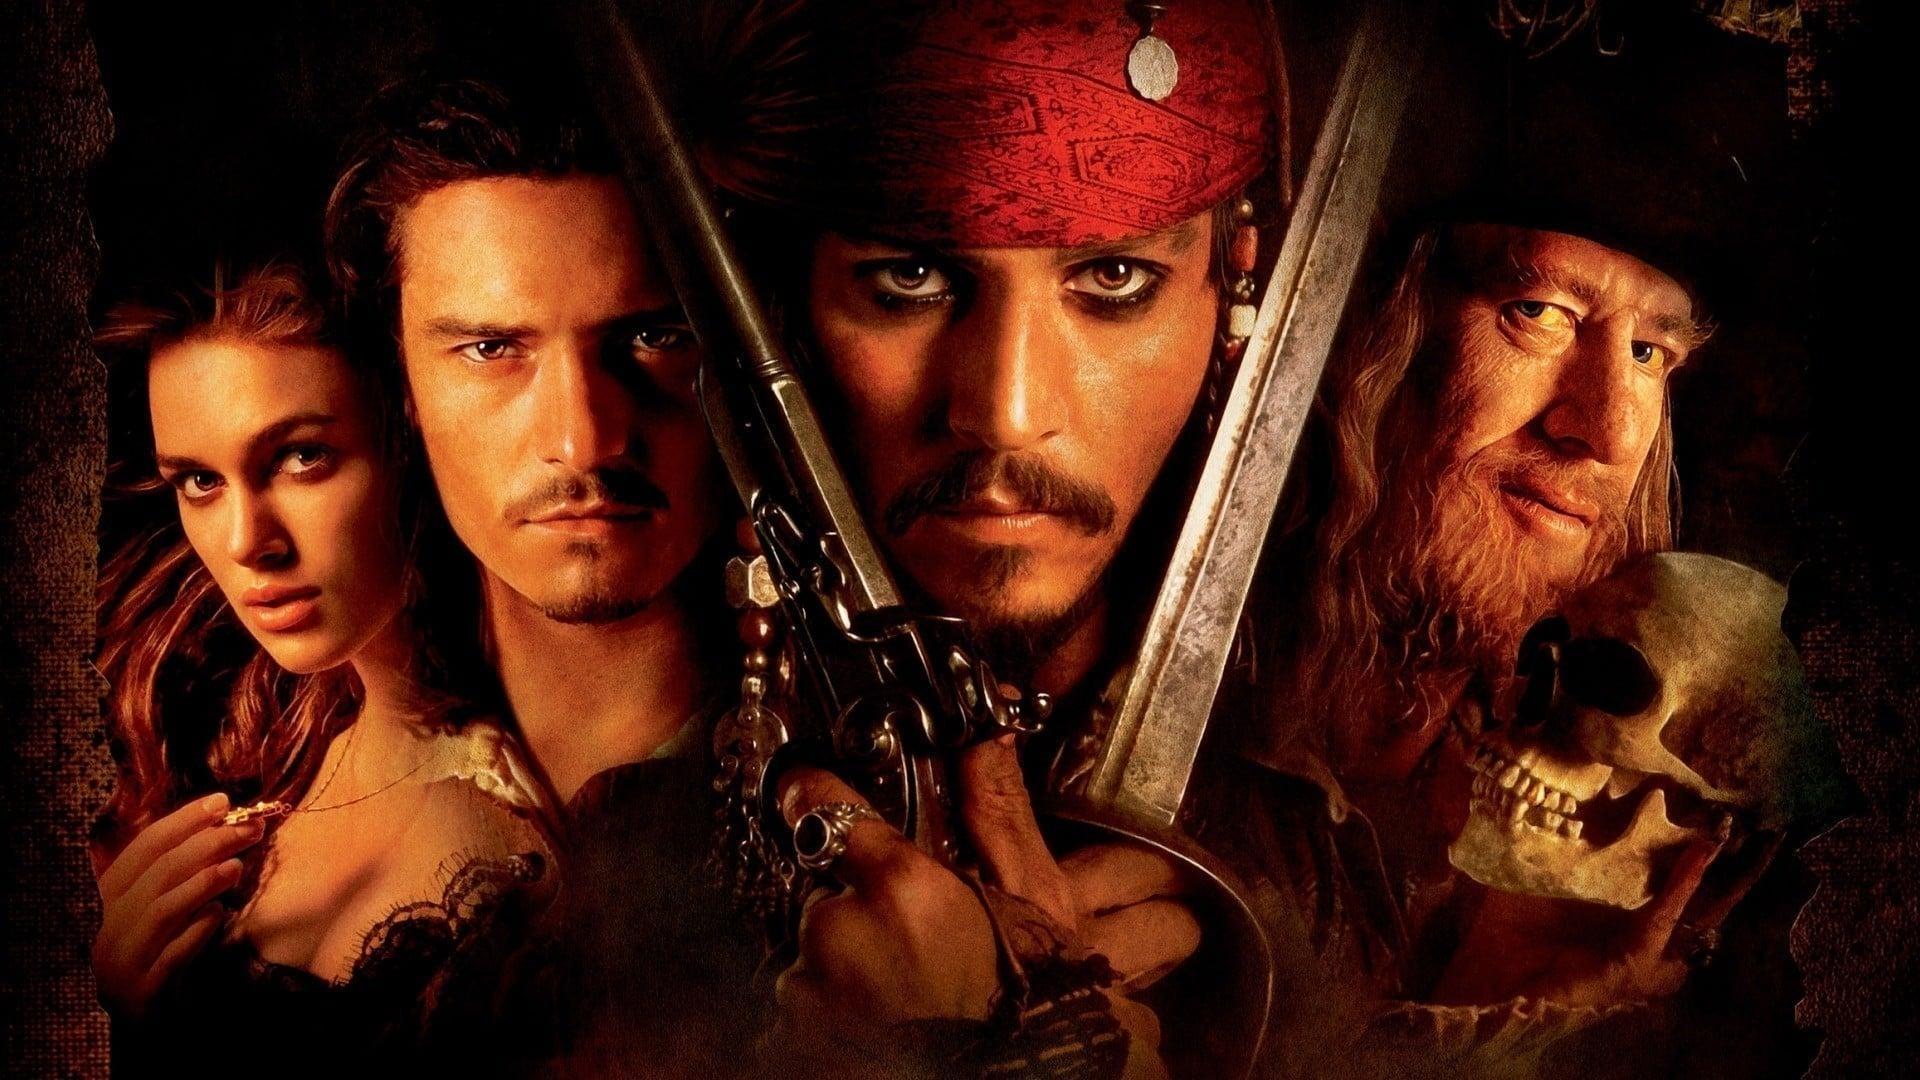 دانلود فیلم Pirates of the Caribbean: the Curse of the Black Pearl 2003